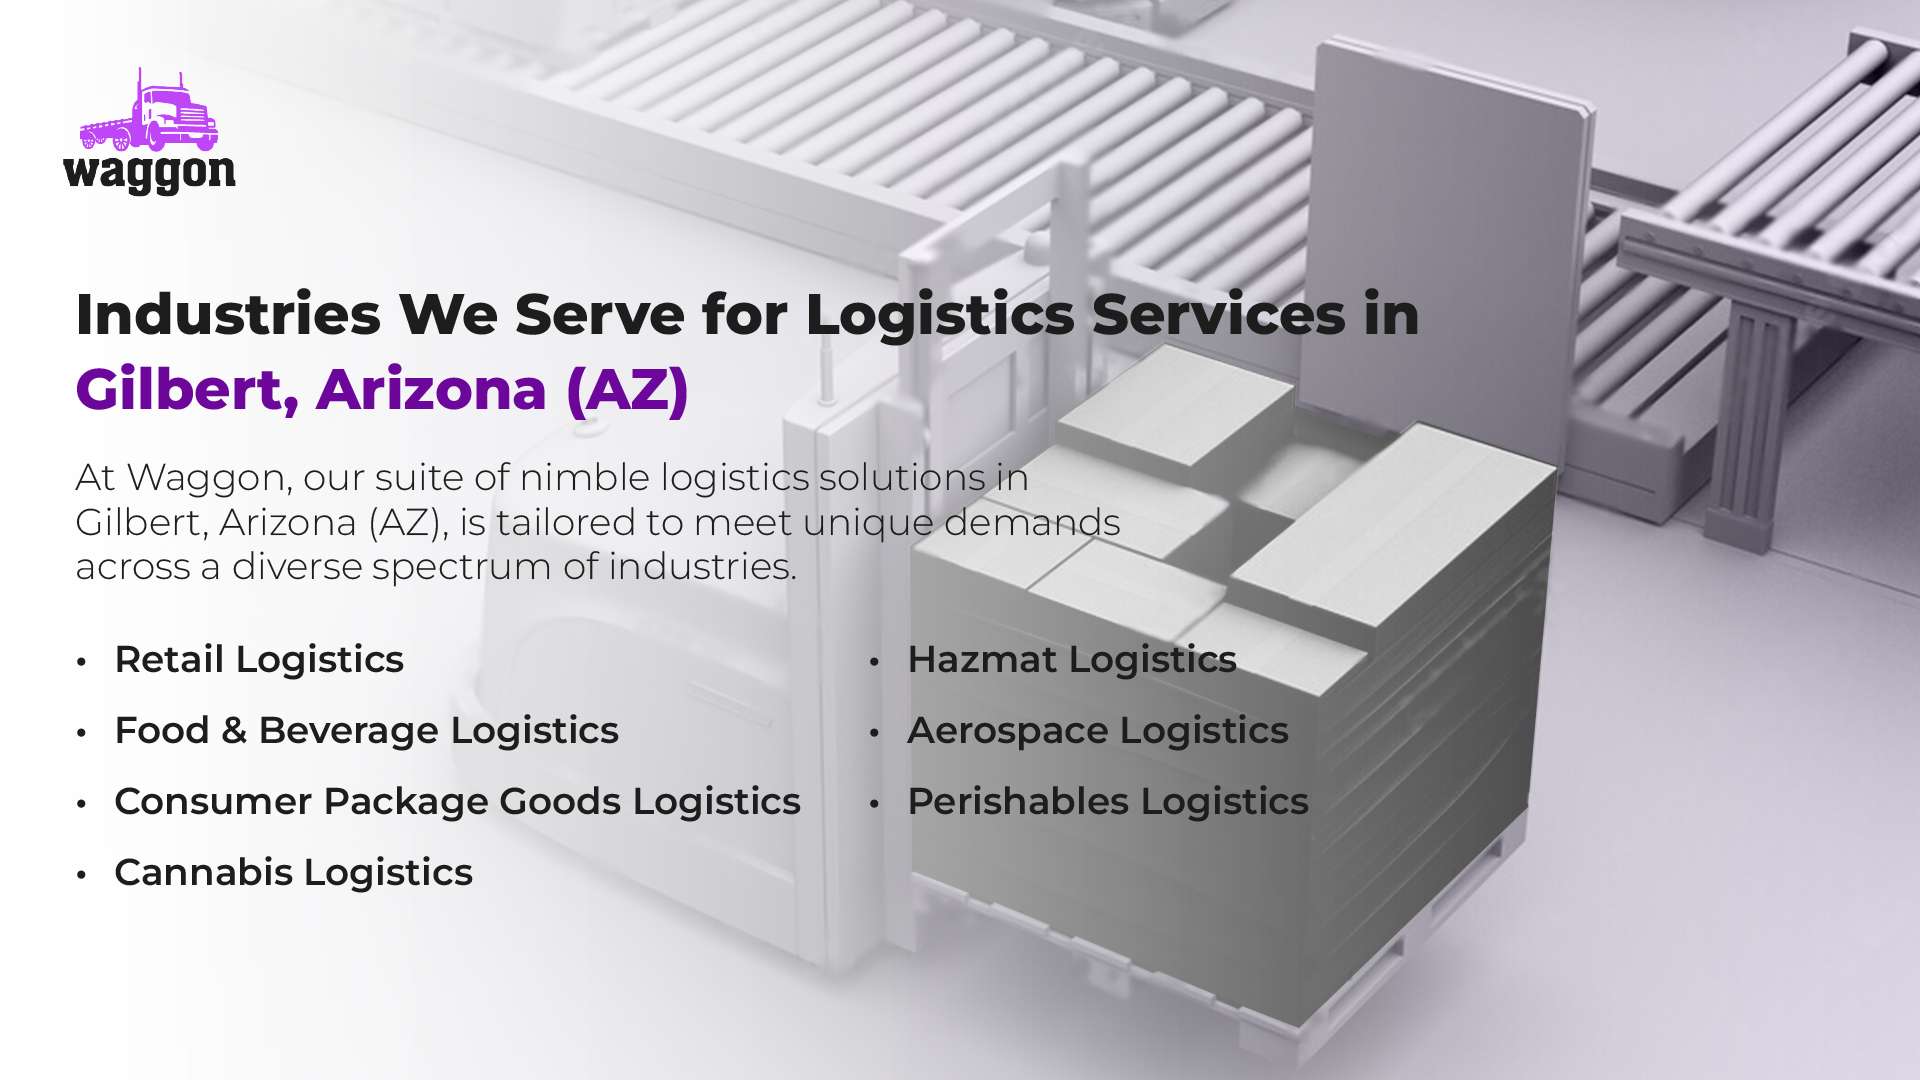 Industries We Serve for Logistics Services in Gilbert, Arizona (AZ)